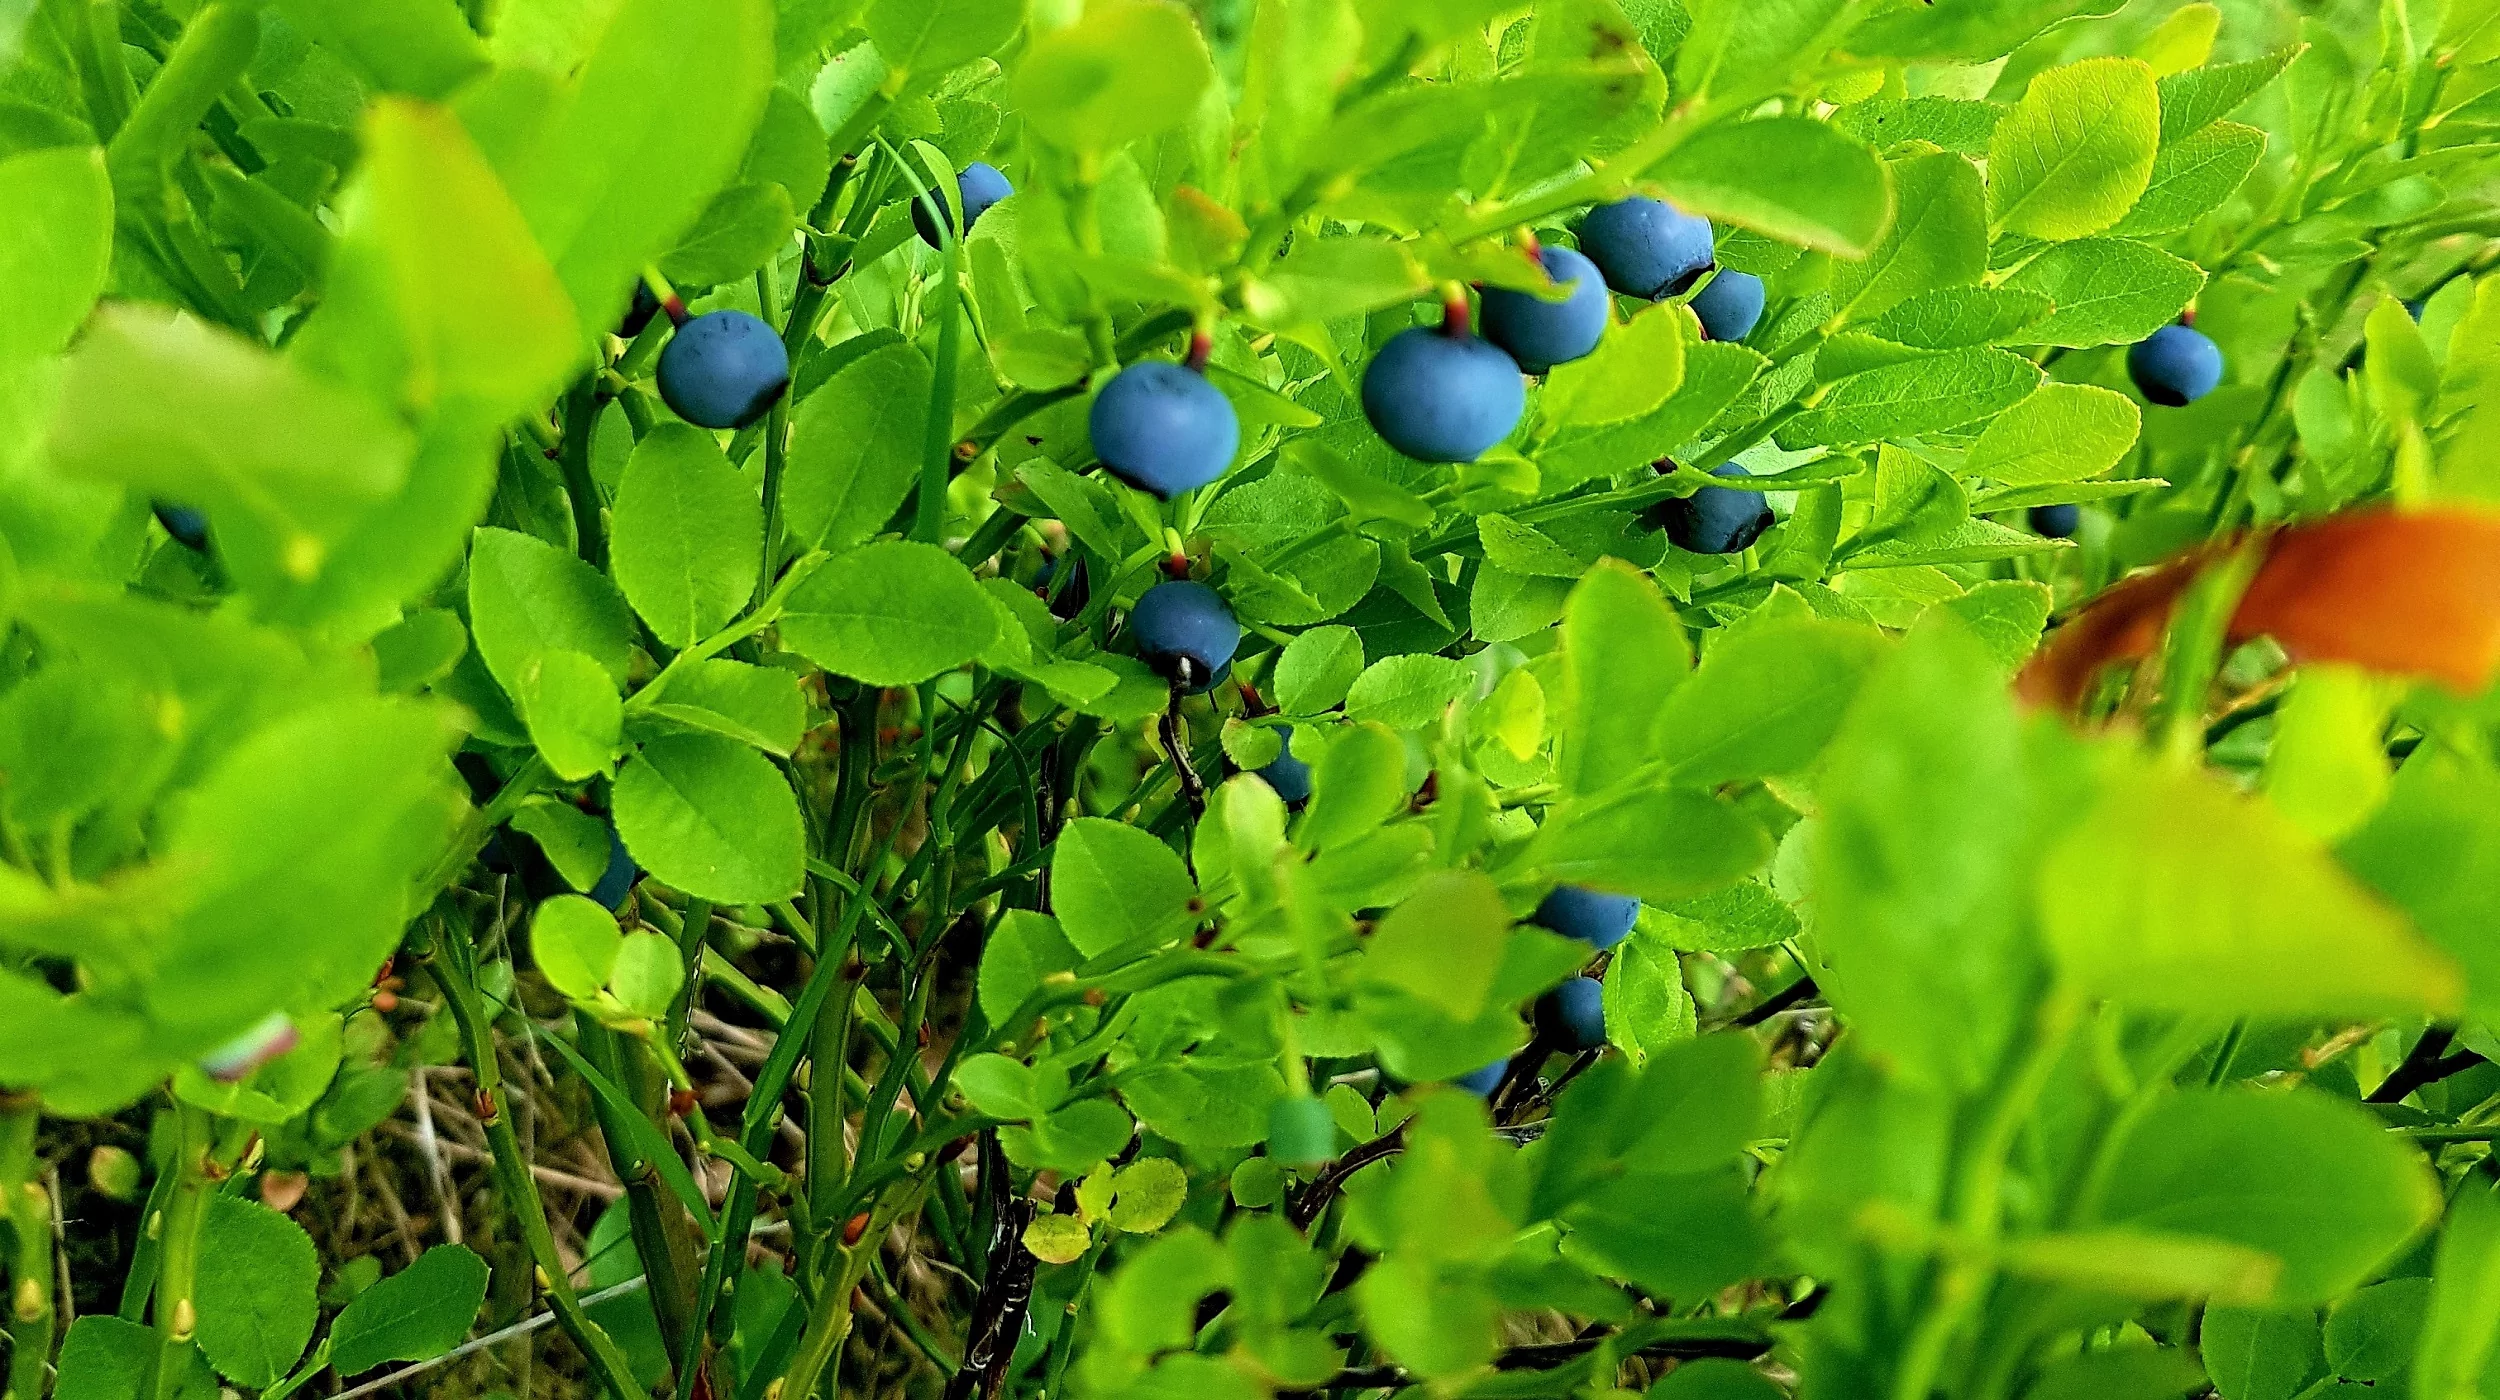 Herbalism blueberries camp Verusa Montenegro